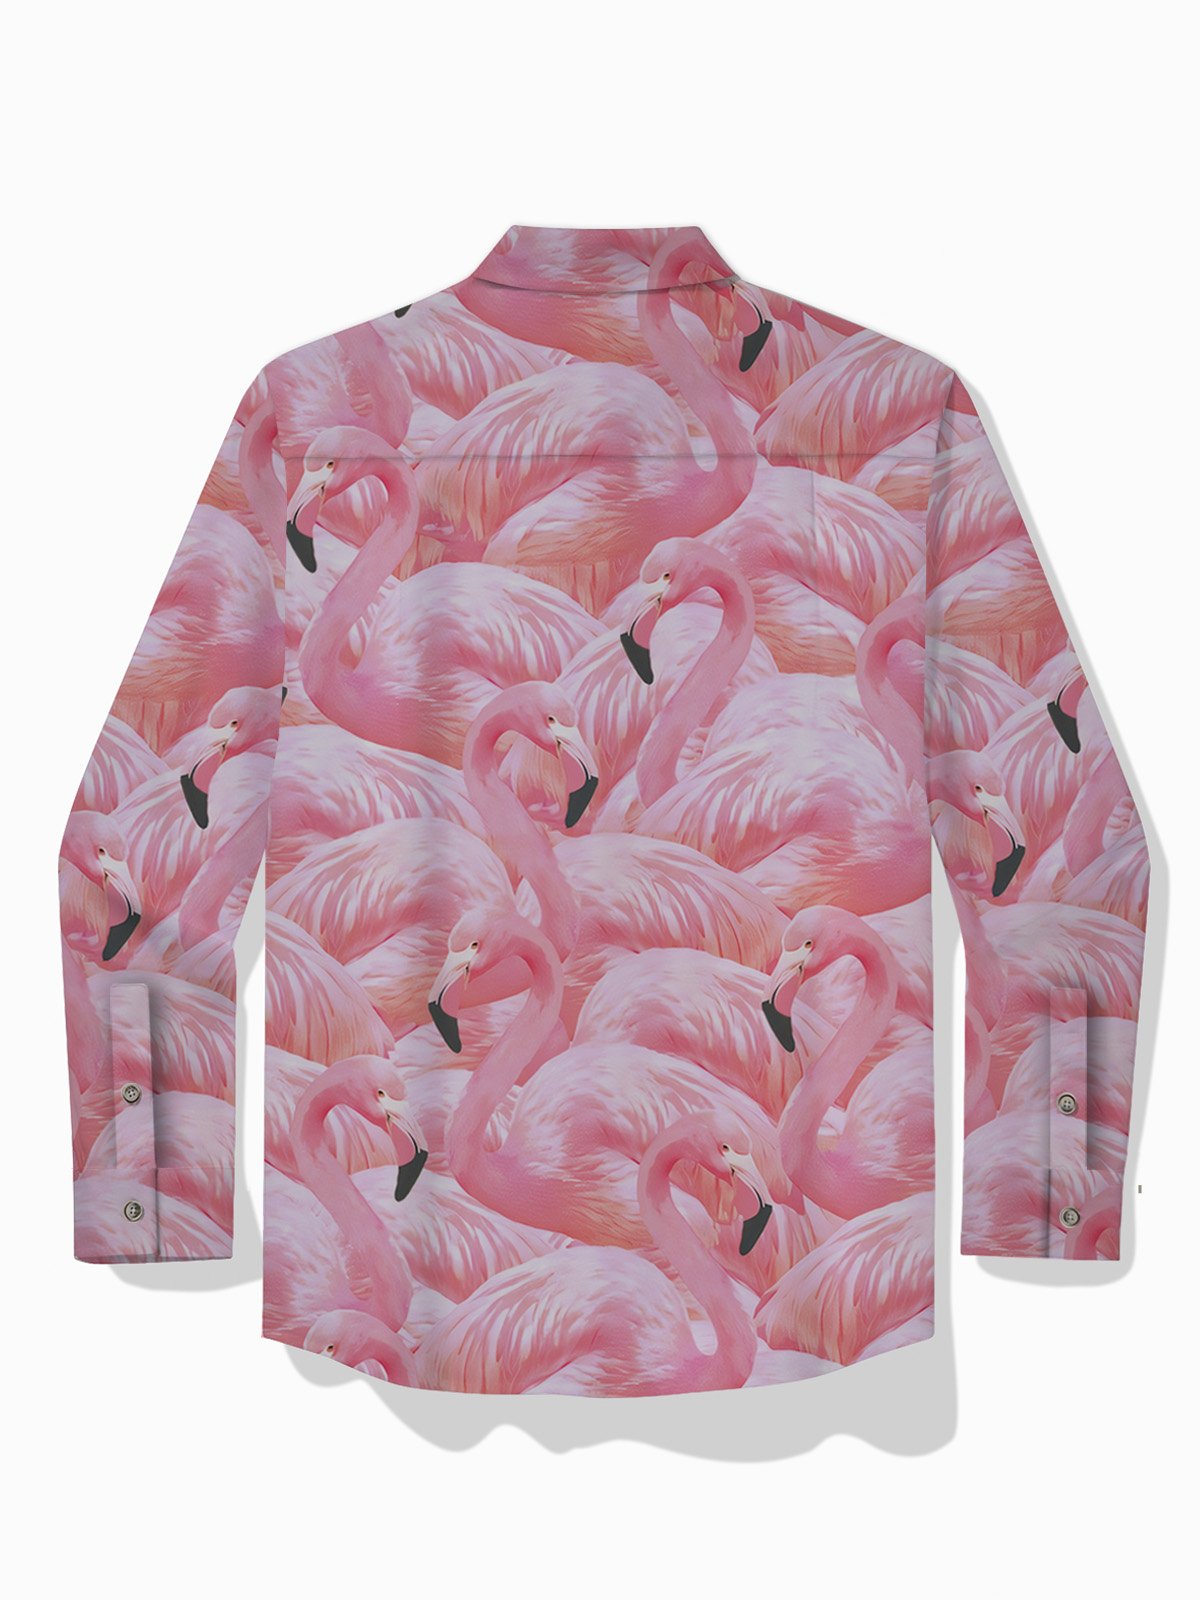 Royaura® Hawaiian Flamingo Print Men's Button Pocket Short Sleeve Shirt